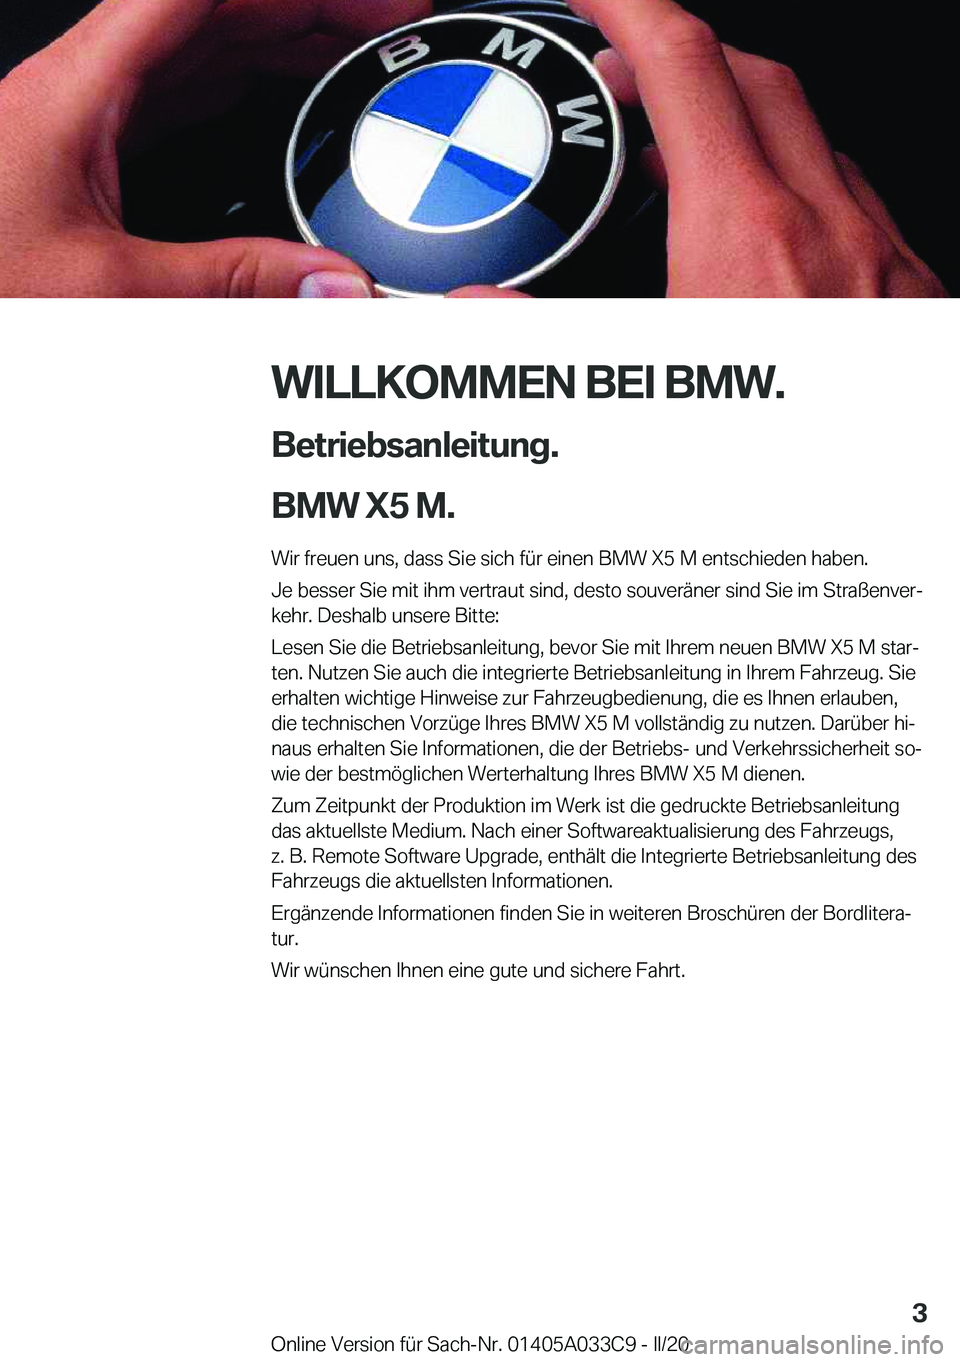 BMW X5 M 2020  Betriebsanleitungen (in German) �W�I�L�L�K�O�M�M�E�N��B�E�I��B�M�W�.�B�e�t�r�i�e�b�s�a�n�l�e�i�t�u�n�g�.
�B�M�W��X�5��M�. �W�i�r��f�r�e�u�e�n��u�n�s�,��d�a�s�s��S�i�e��s�i�c�h��f�